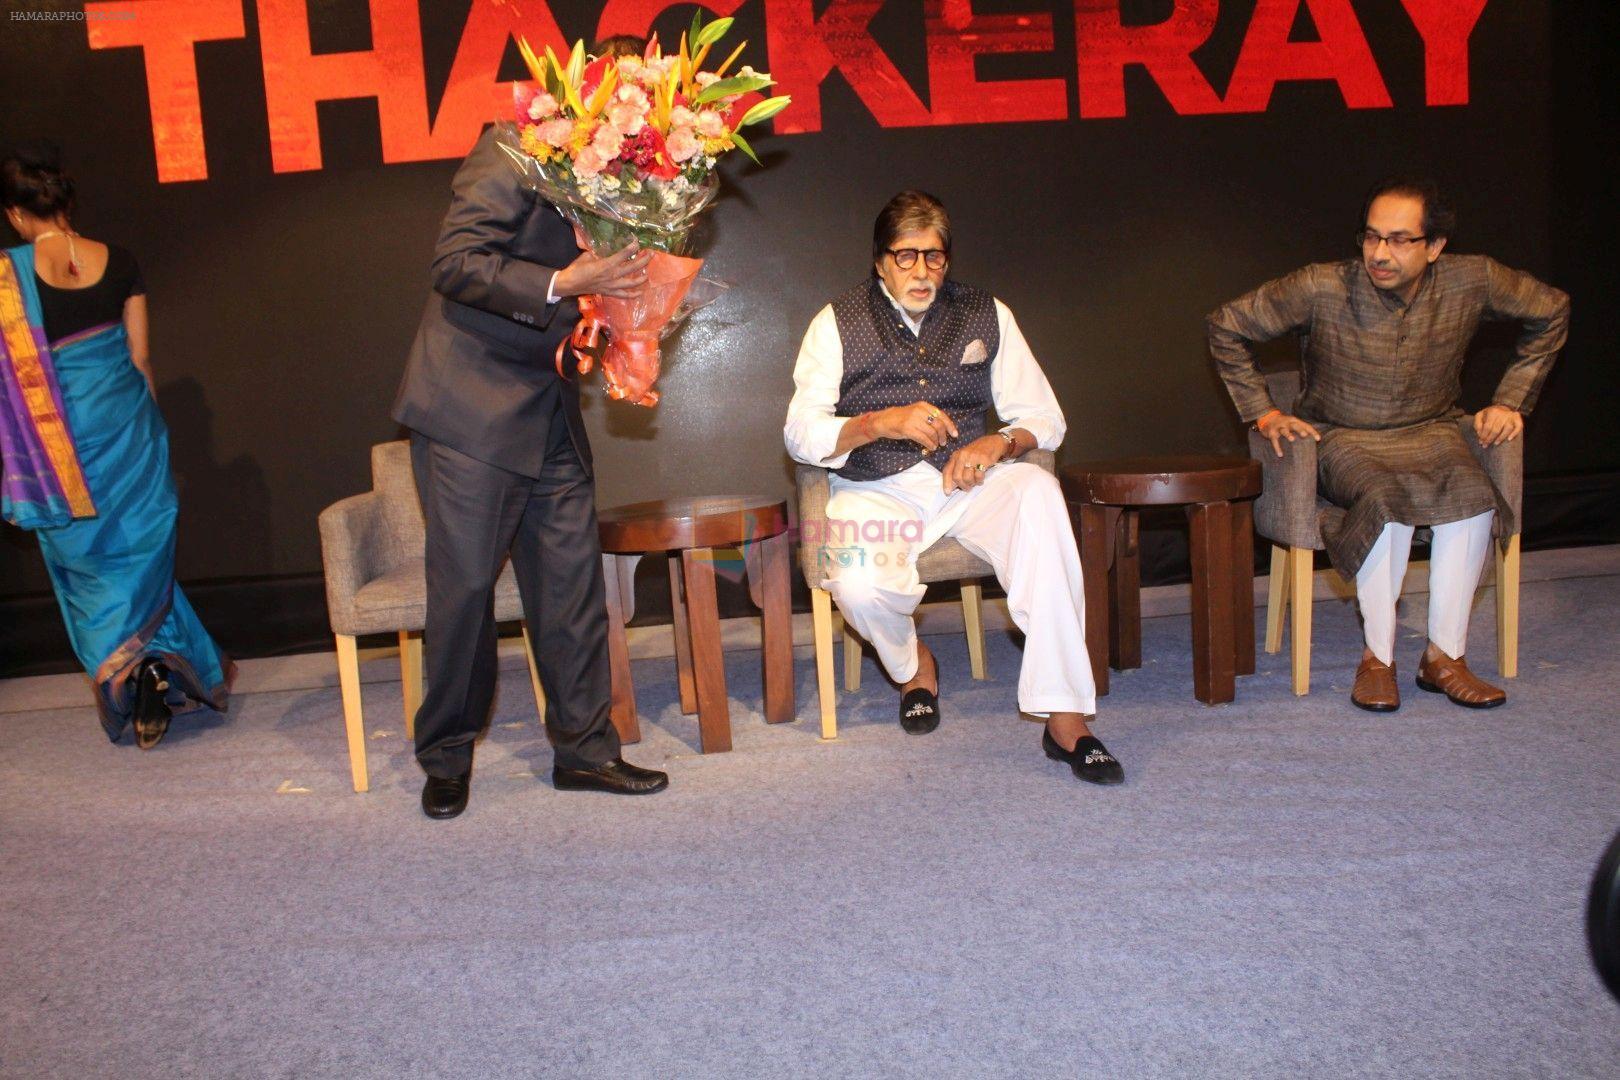 Amitabh Bachchan at the Teaser Launch Of Flim Based On Late Shri Bala Saheb Thackeray on 21st Dec 2017